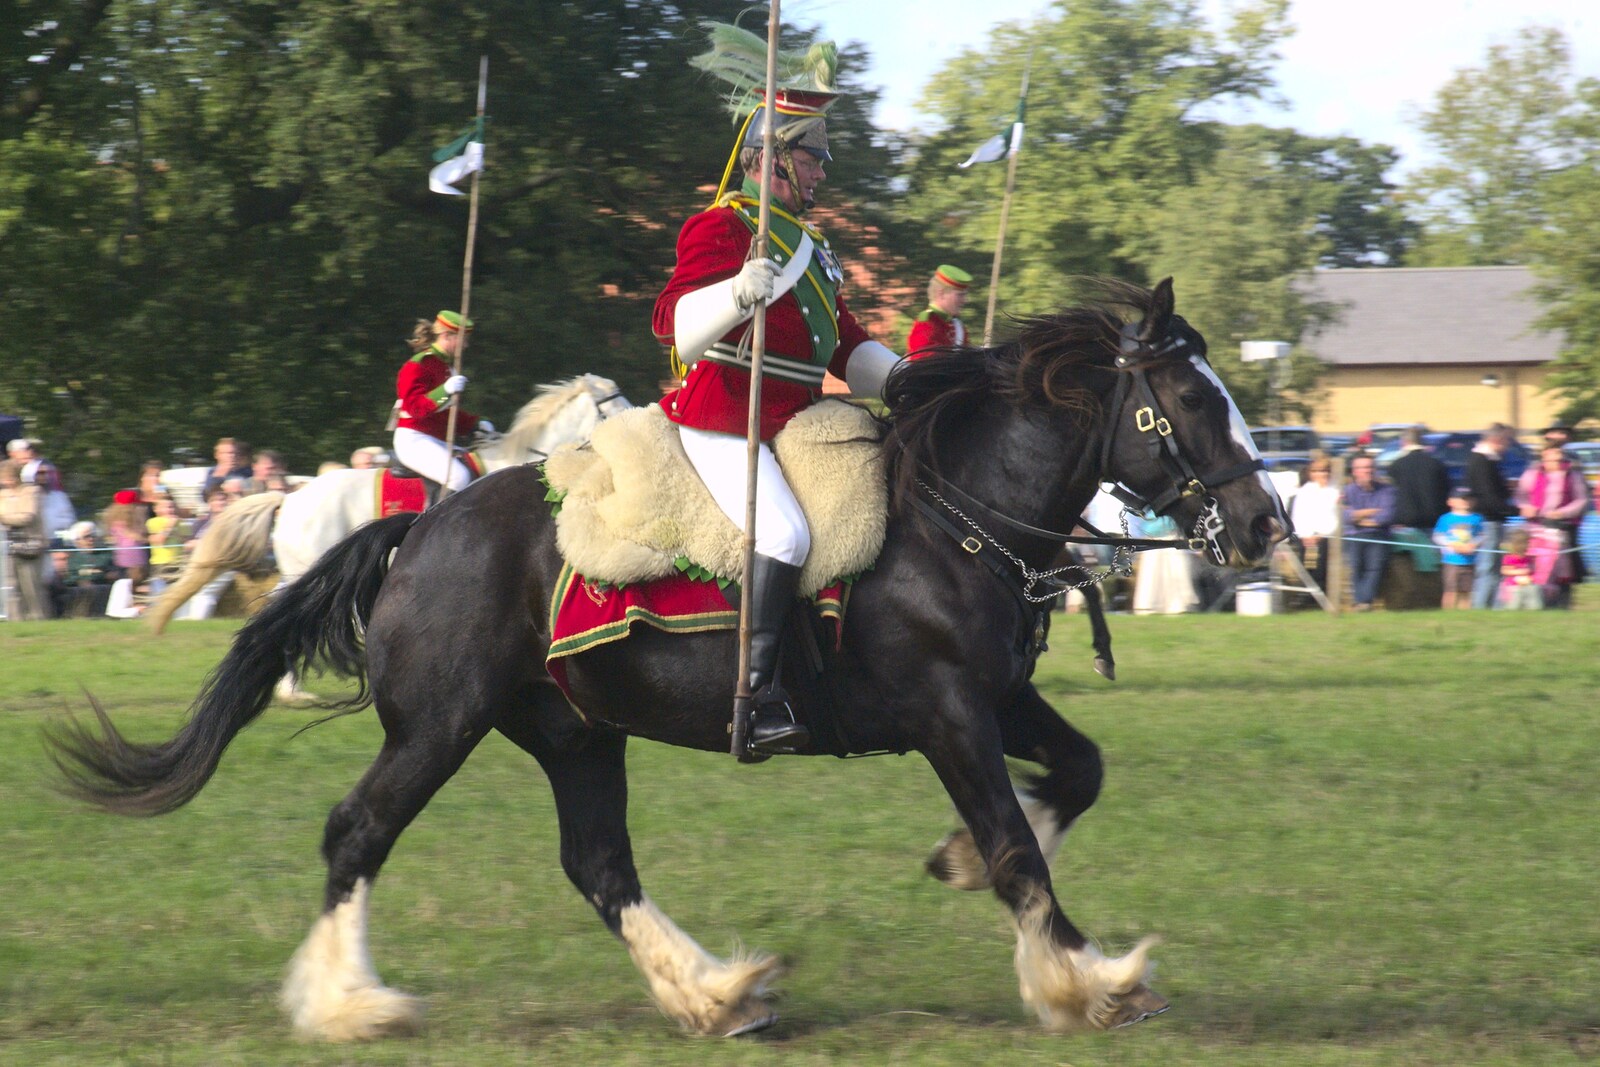 The Eye Show, Palgrave, Suffolk - 30th August 2010: Having a gallop